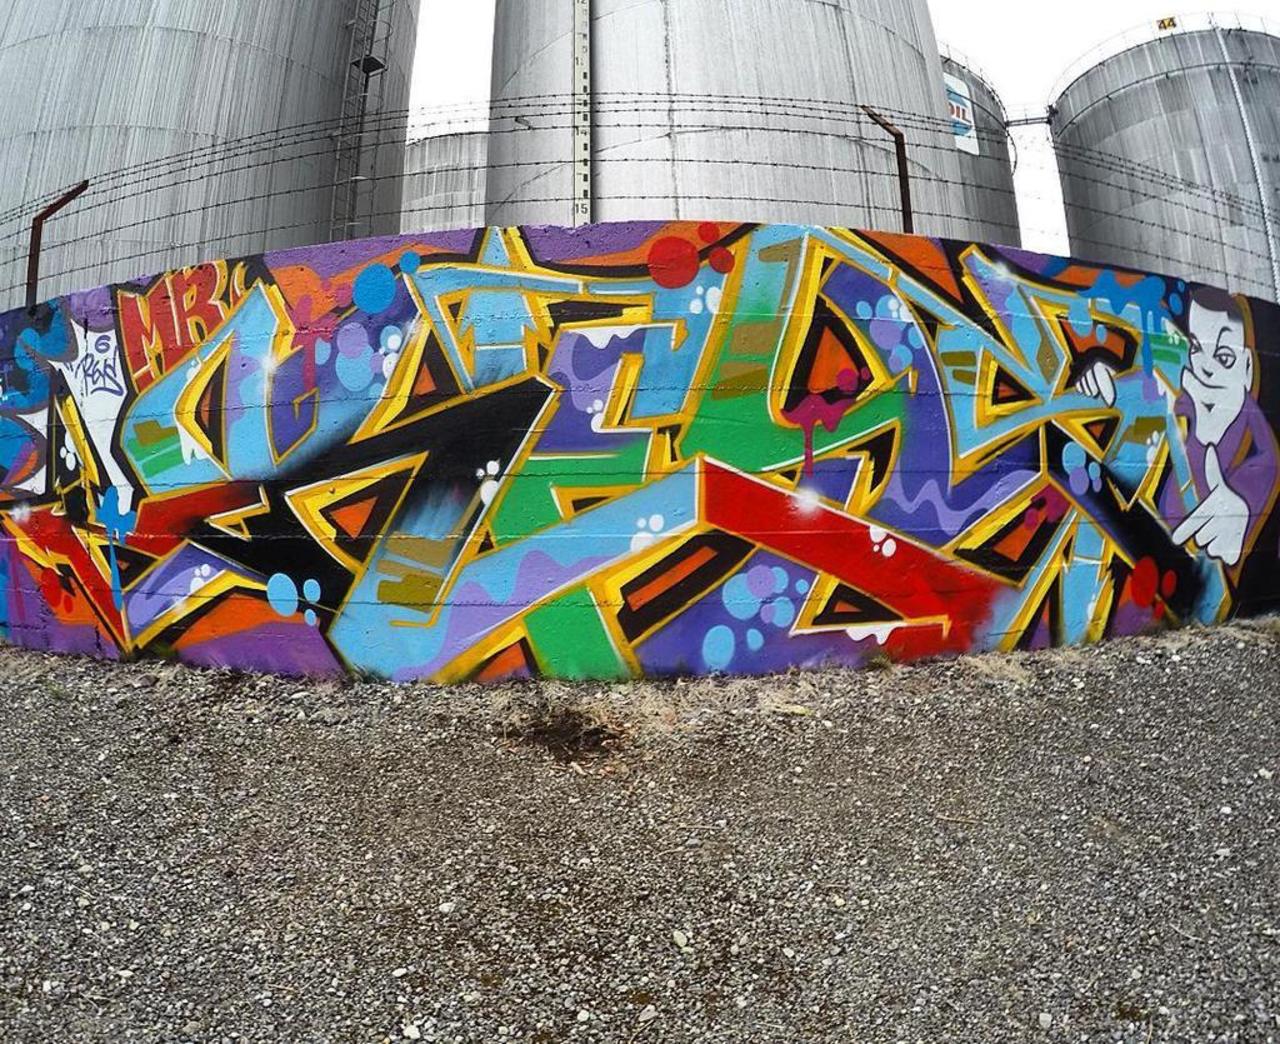 RT @artpushr: via #reyism72 "http://bit.ly/1RyTn11" #graffiti #streetart http://t.co/Dv5KcqnXID